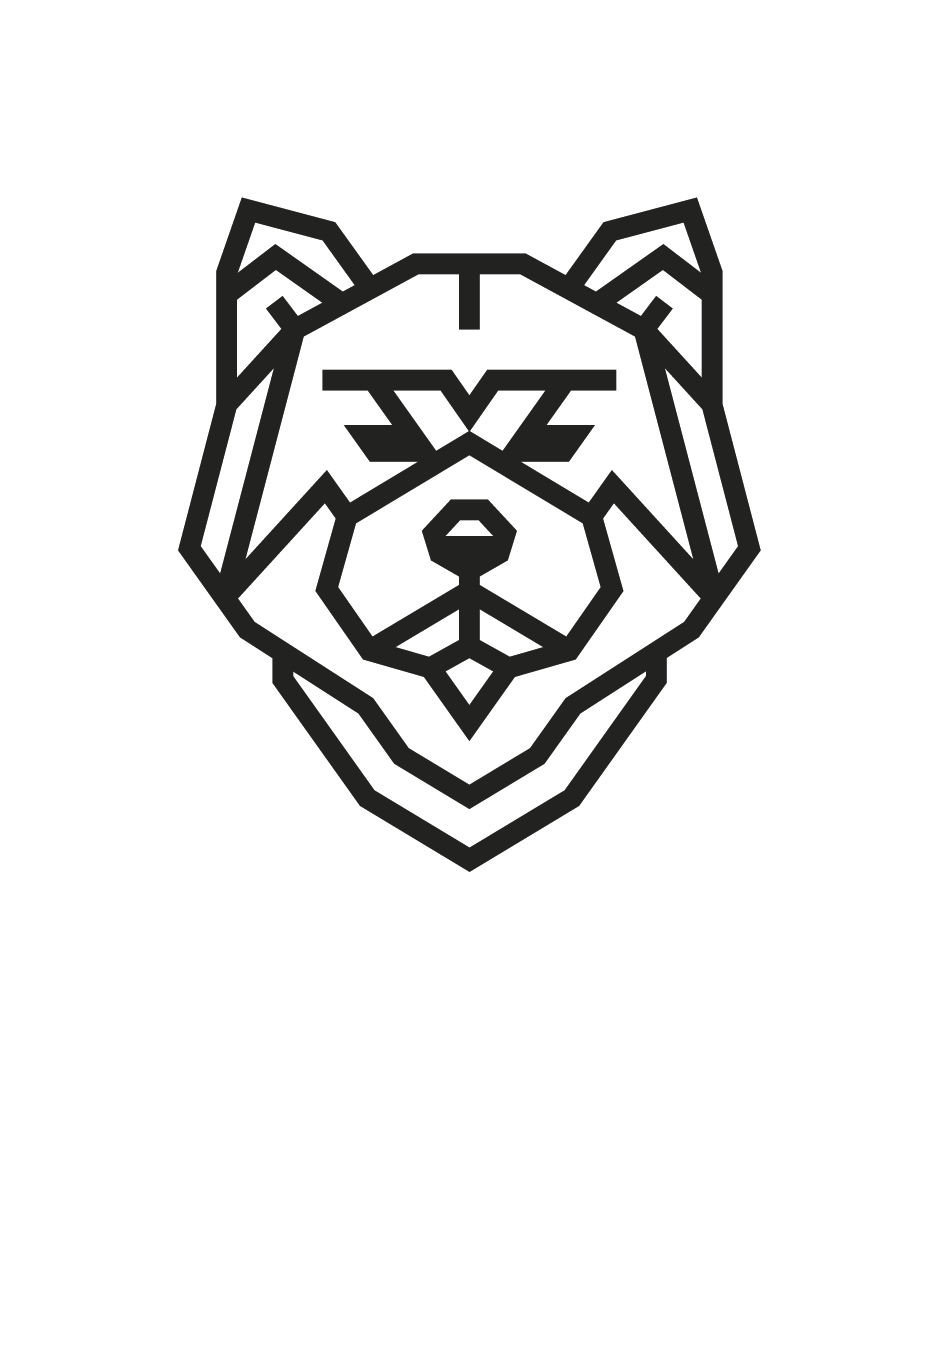 Akita events main image